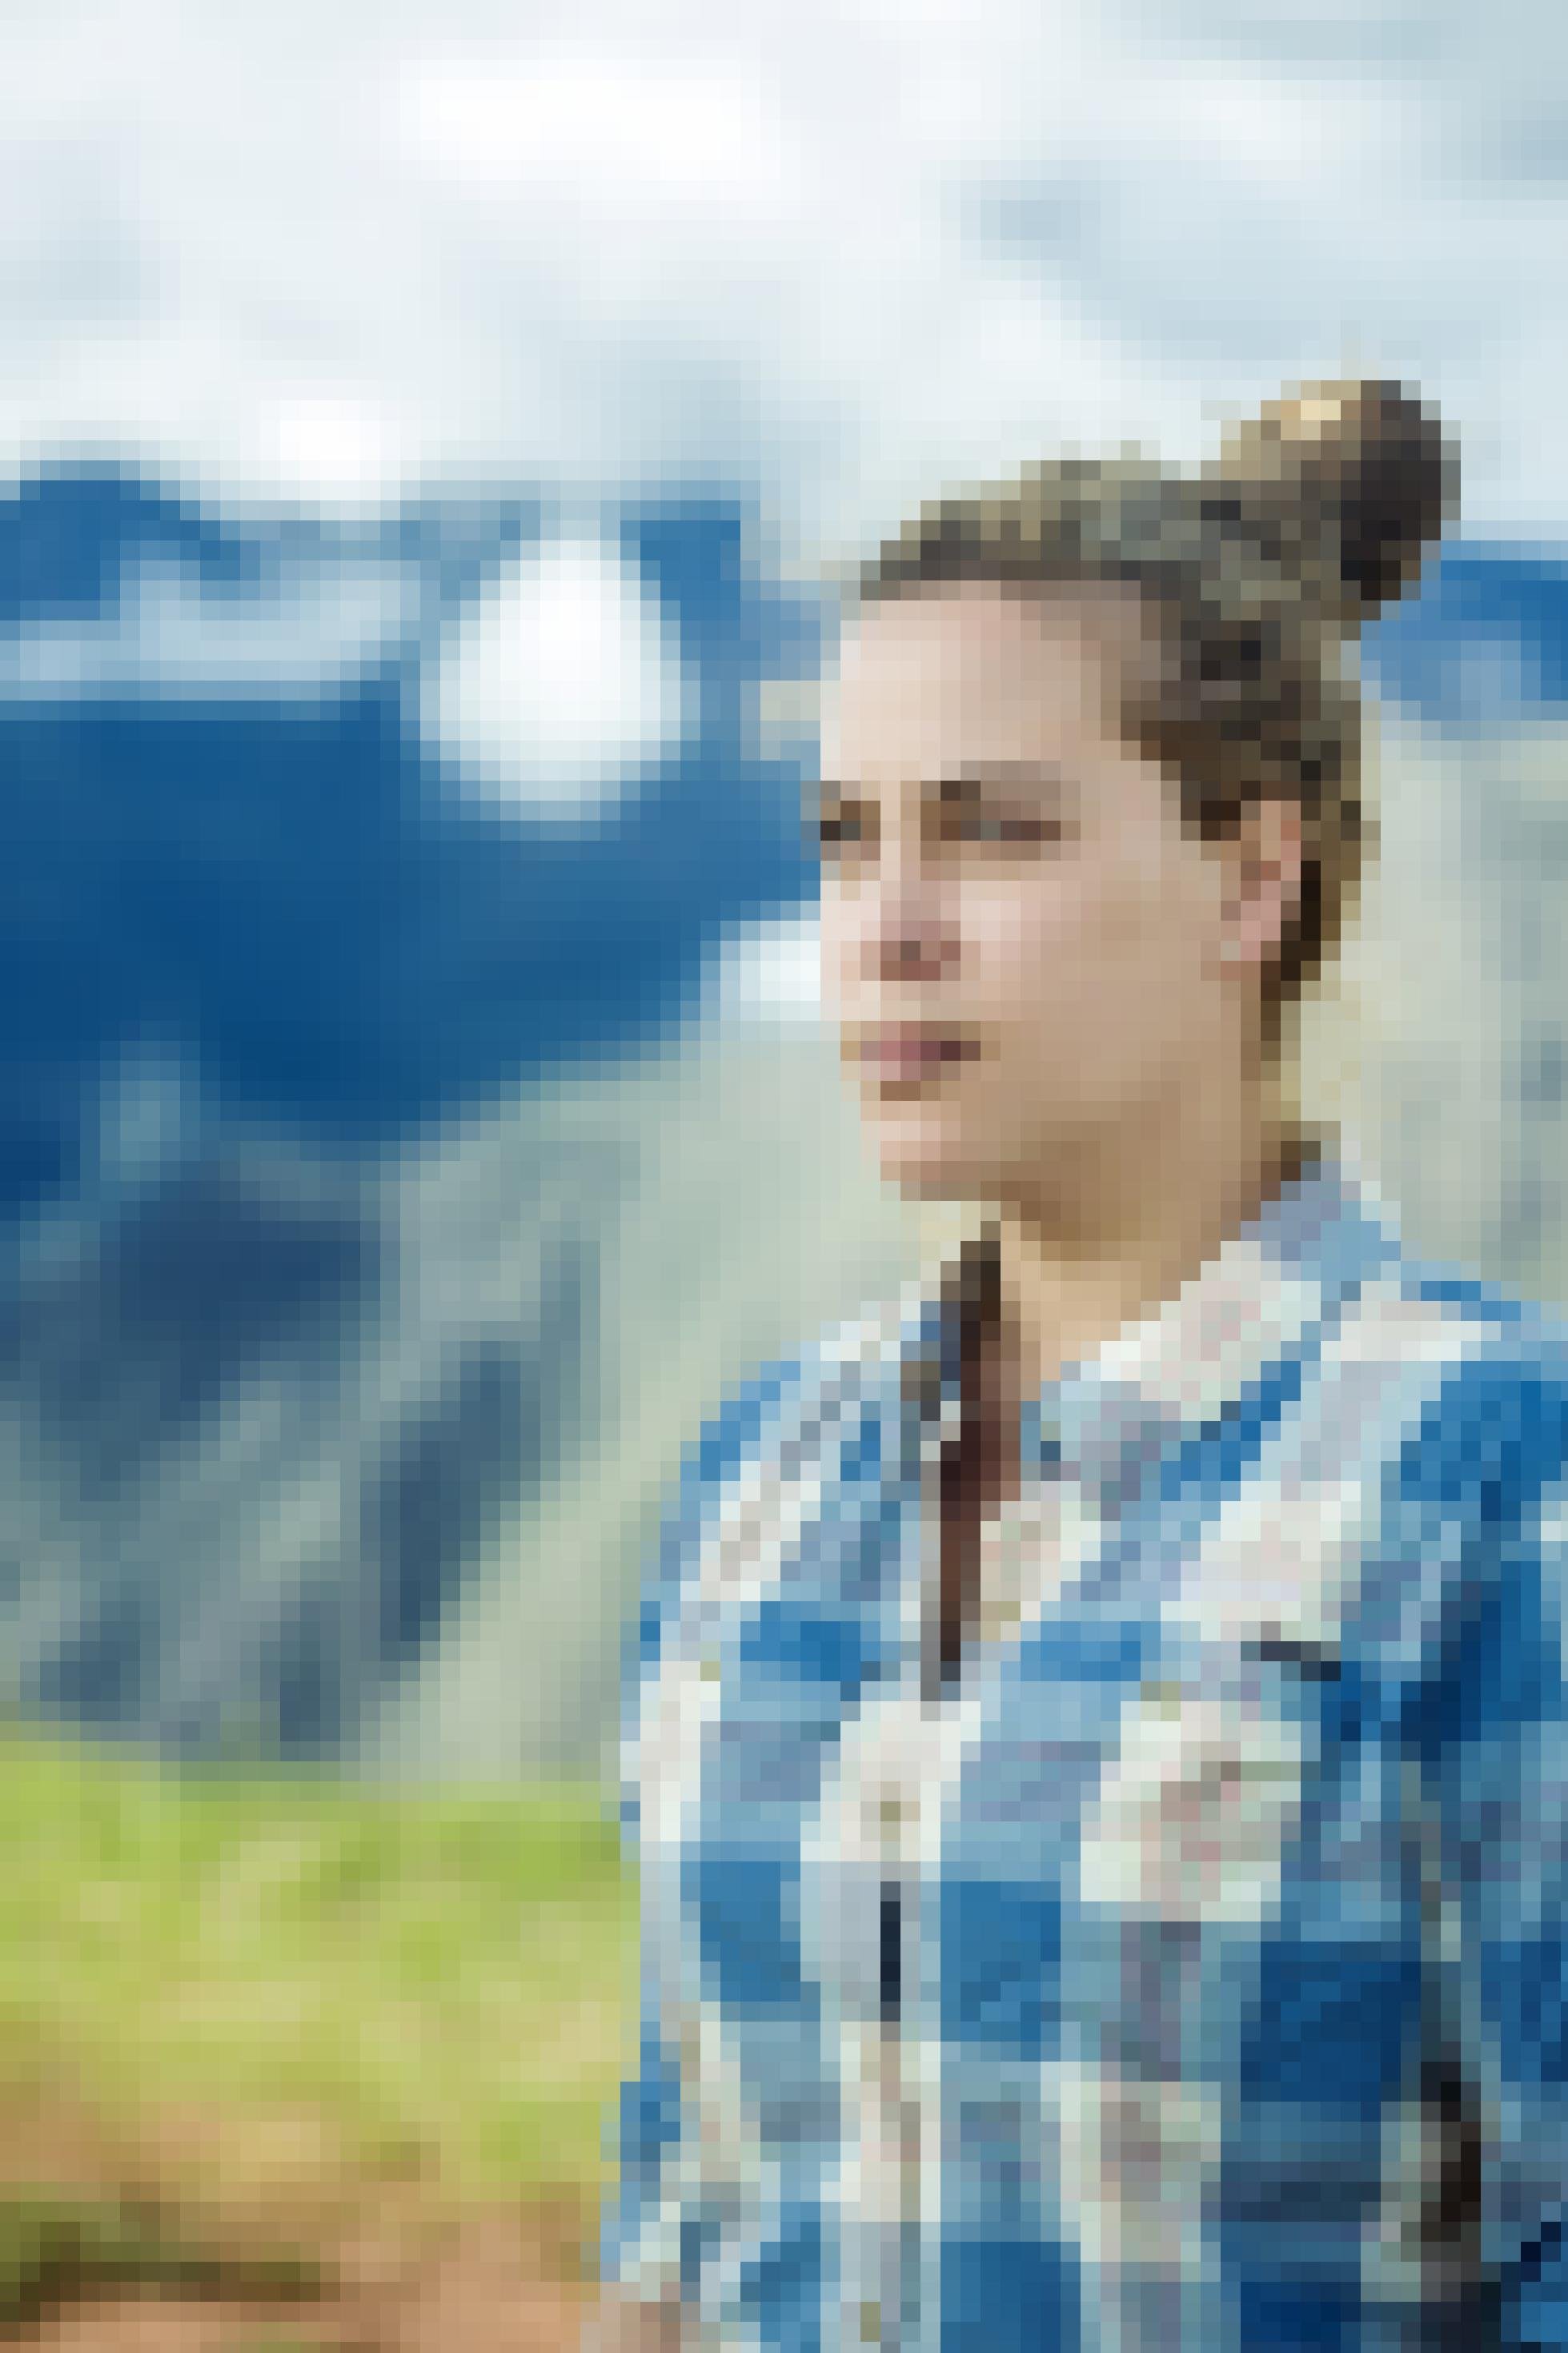 Junge Frau mit losem Dutt in Holzfellerhemd vor unscharfer Berglandschaft.